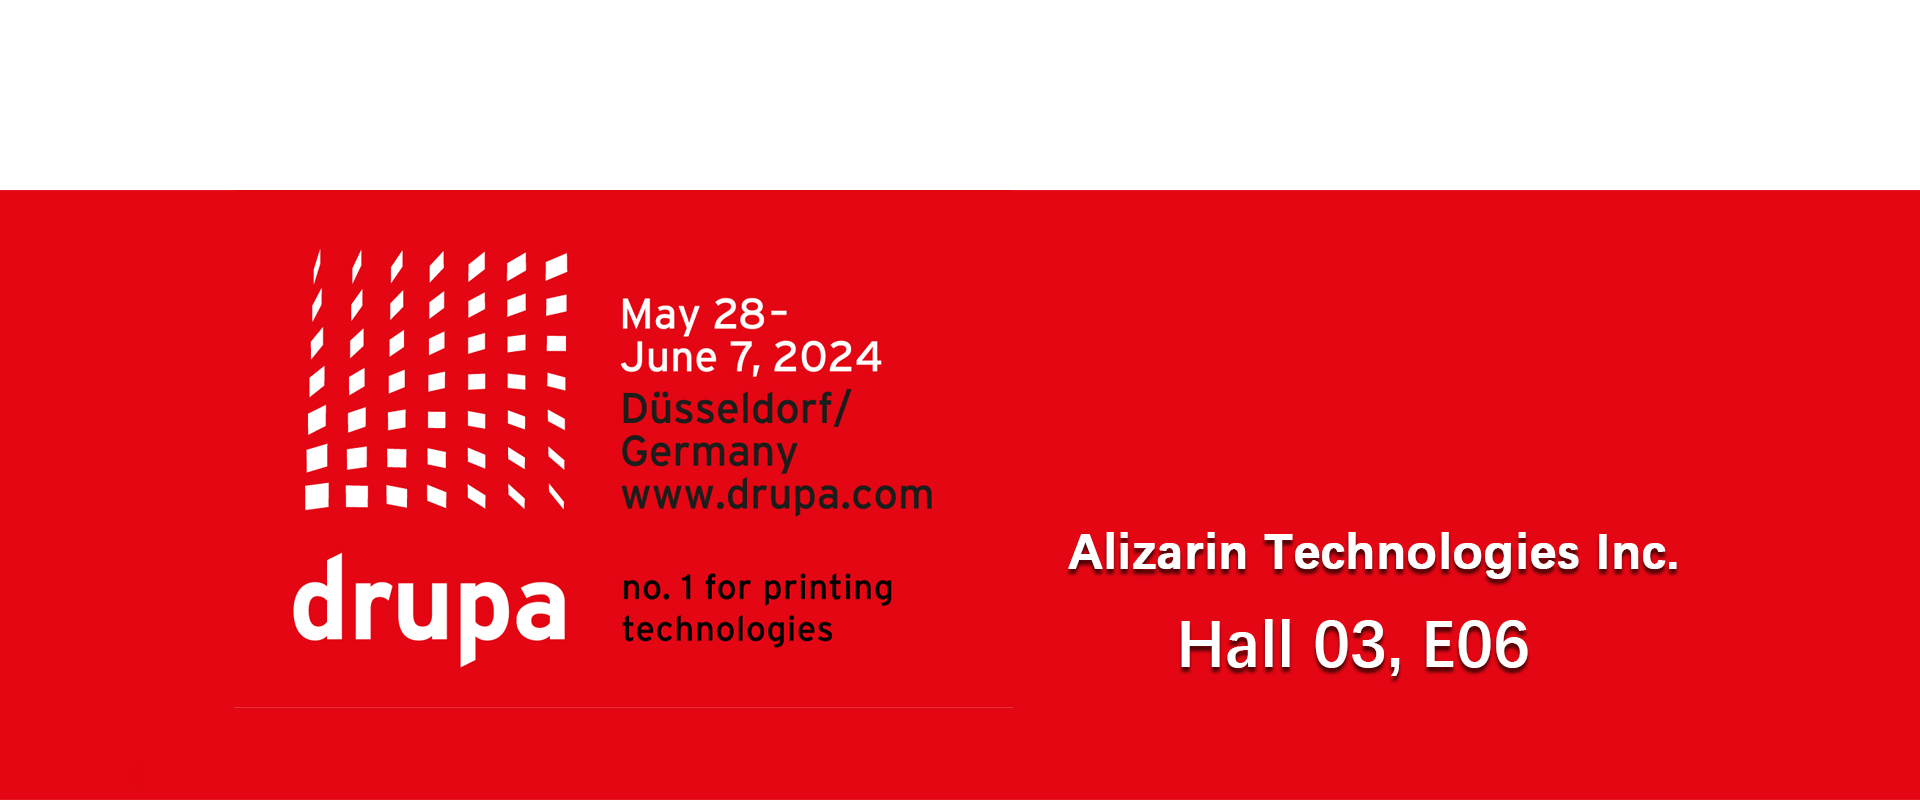 Drupa 2024 Düsseldorf Jeremane, alizarin technologies Booth ke Hall 03, E06